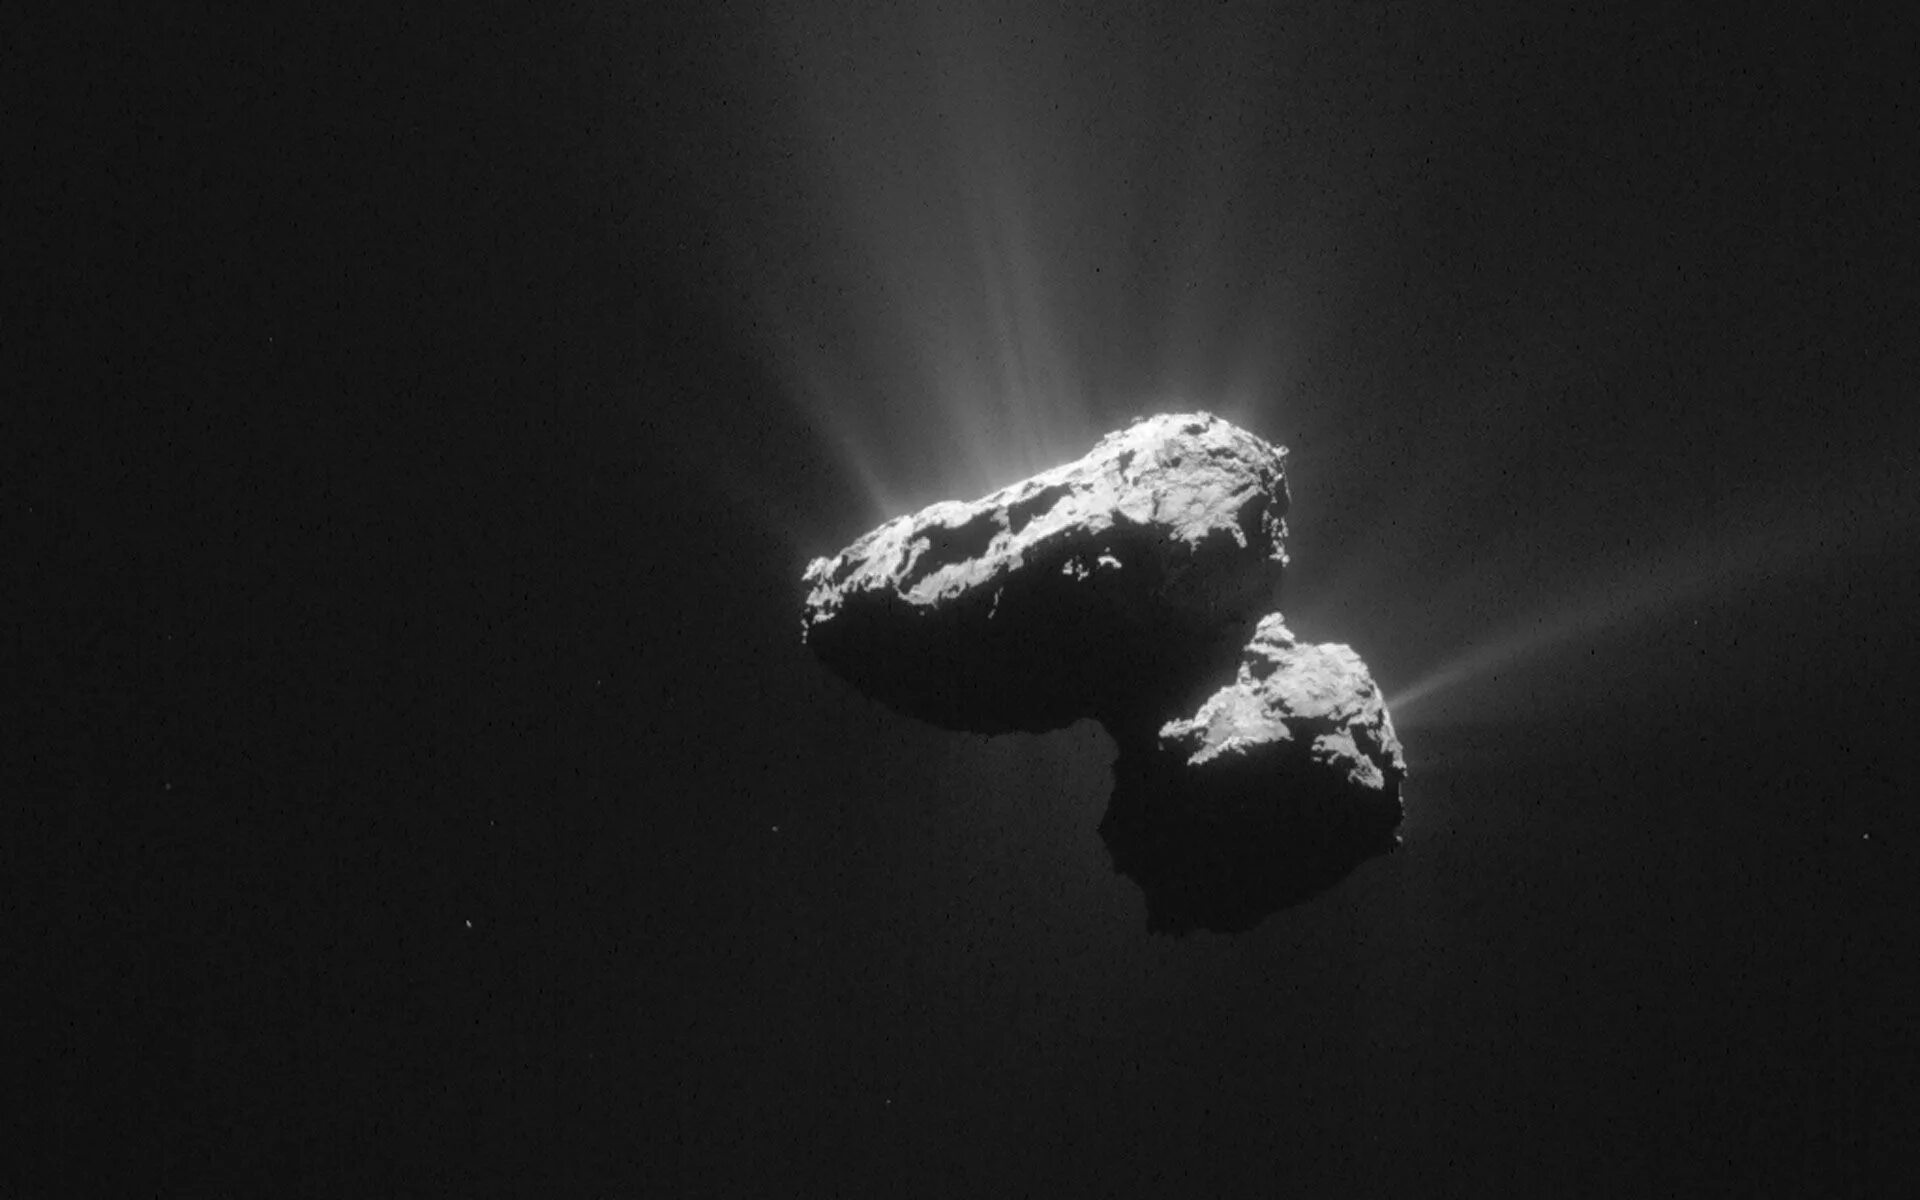 67p чурюмова герасименко. Комета 67p. Комета 67p/Чурюмова-Герасименко Rosetta. Comet 67p/Churyumov-Gerasimenko.